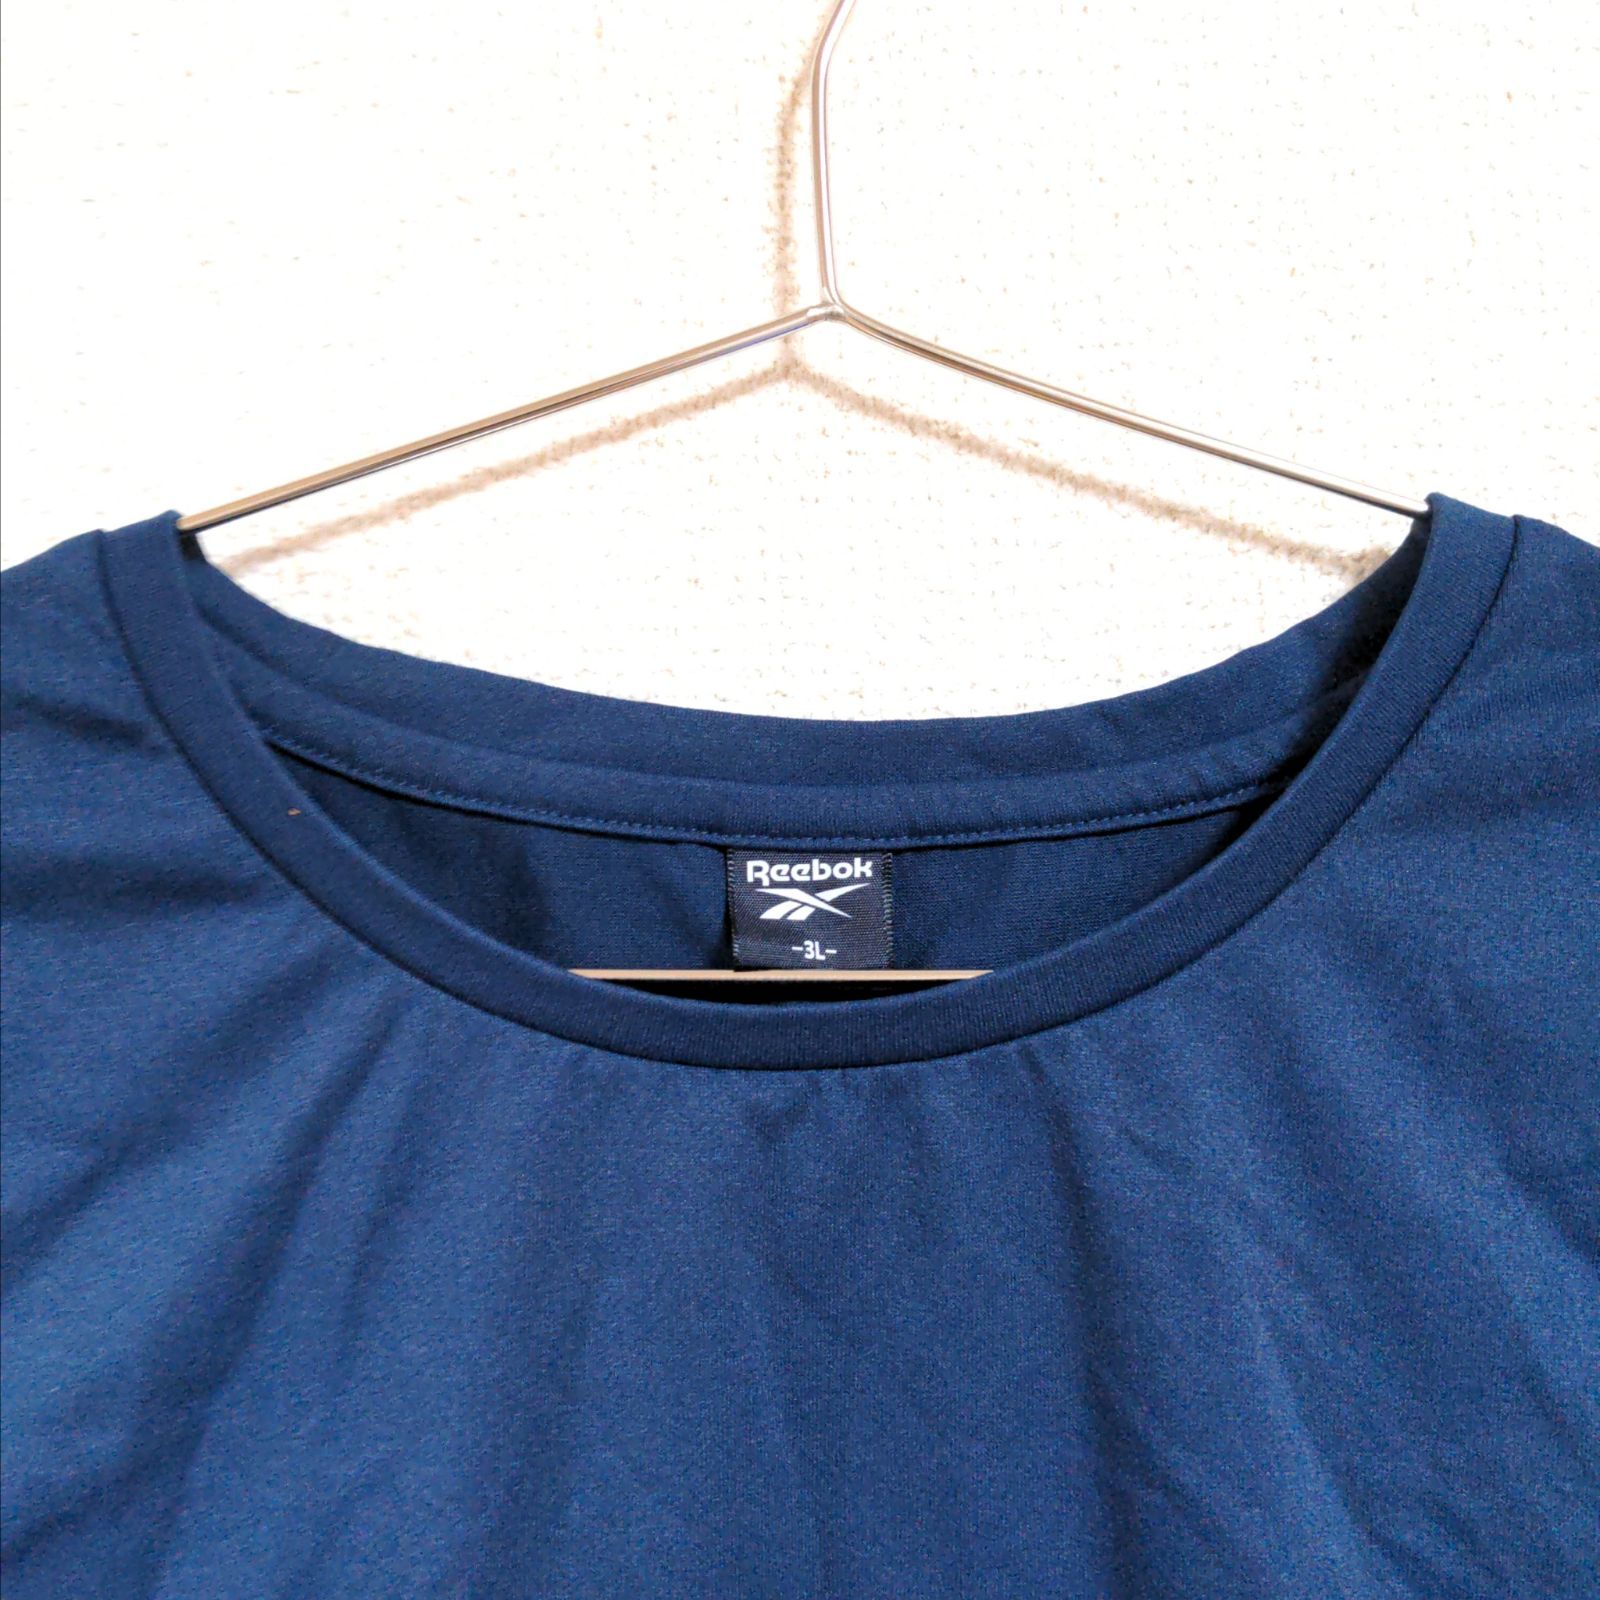 Reebok リーボック 3L インディゴブルー ブランドロゴプリント ラウンドネック 半袖Tシャツ 大きいサイズ スポーツウエア - メルカリ